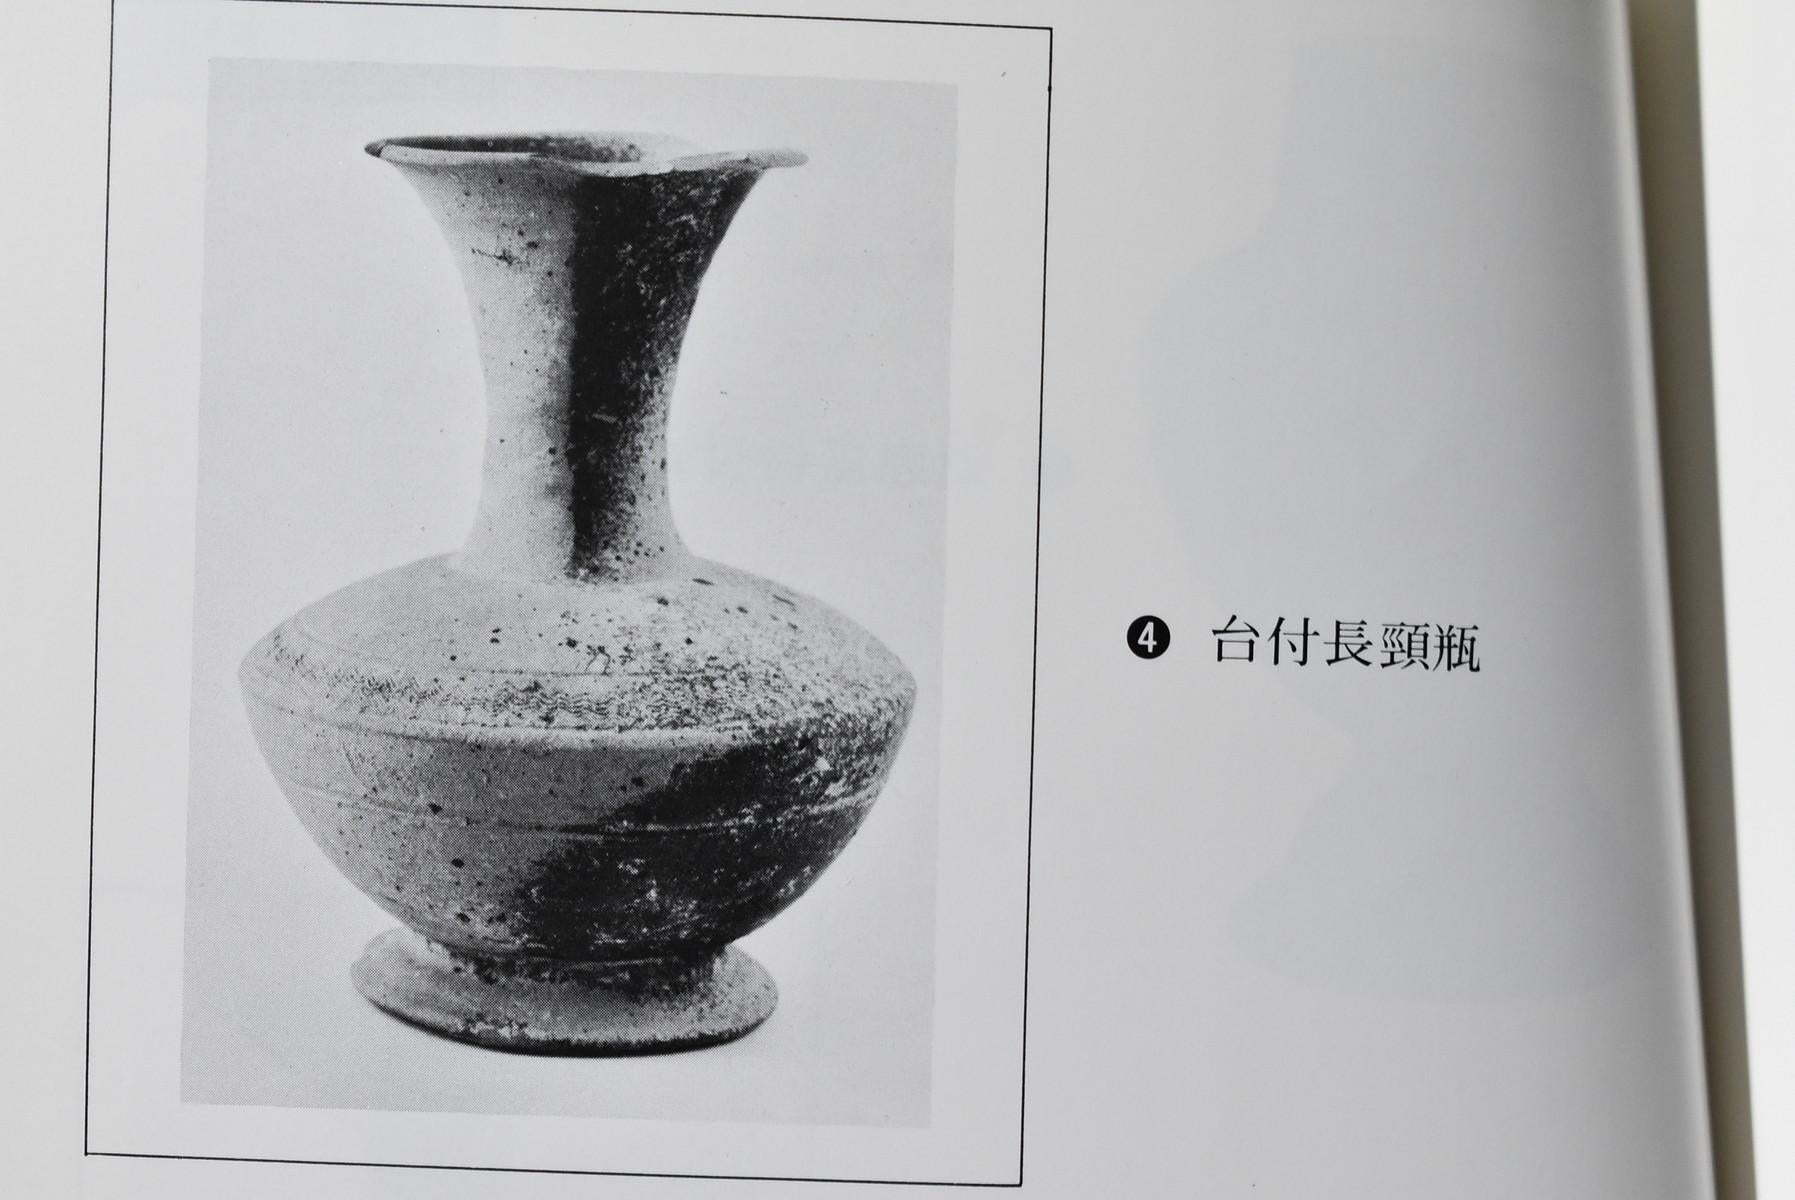 Japanese Antique Pottery 900s-1300s Heian-Kamakura Period 